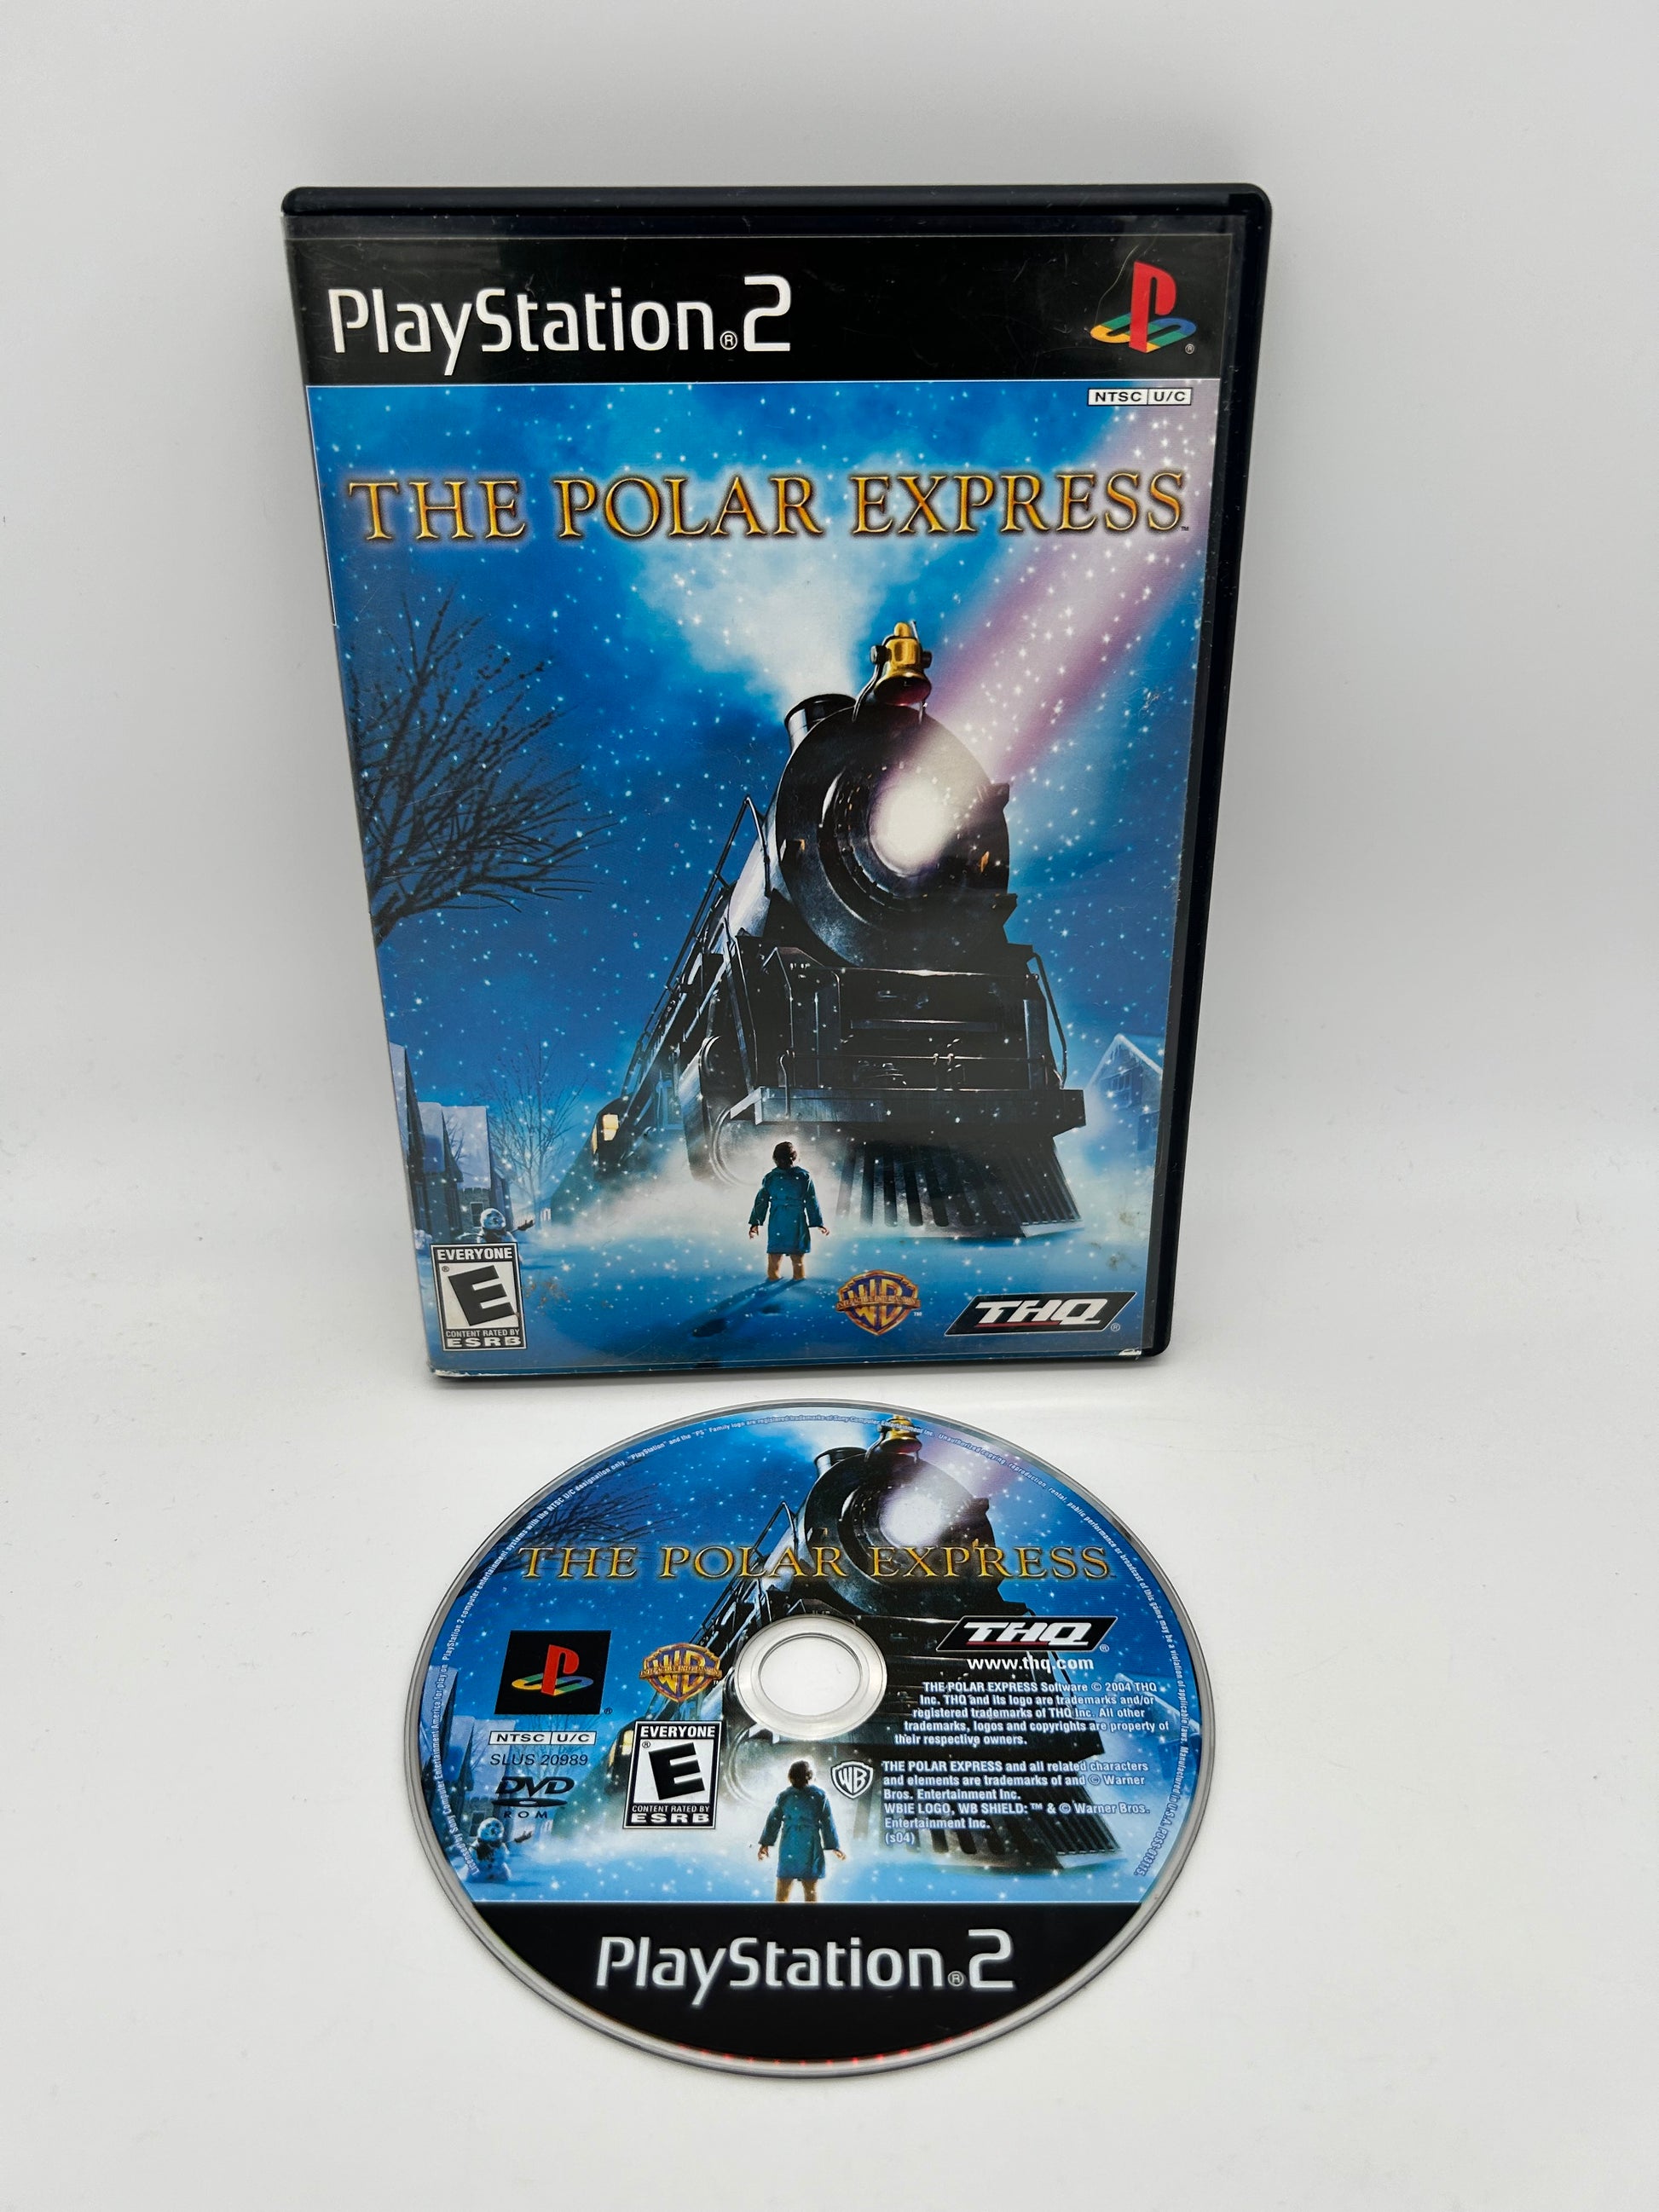 PiXEL-RETRO.COM : SONY PLAYSTATION 2 (PS2) COMPLET CIB BOX MANUAL GAME NTSC THE POLAR EXPRESS